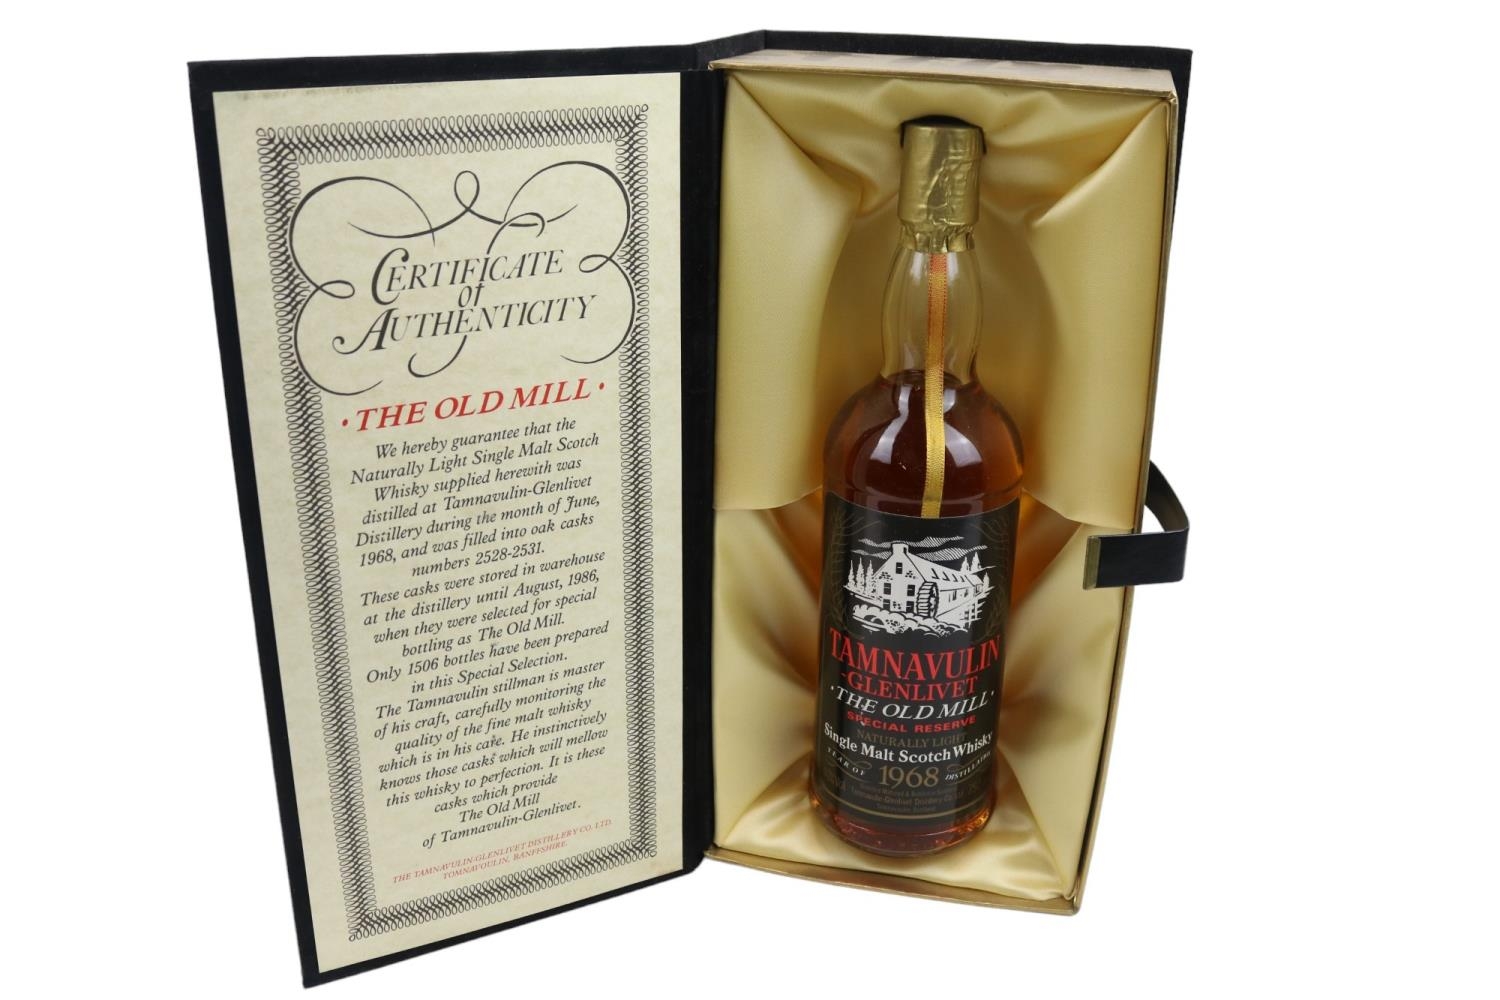 Boxed The Old Mill Tamnavulin-Glenlivet Single Malt Scotch Whisky 1968 750ml 40% Vol